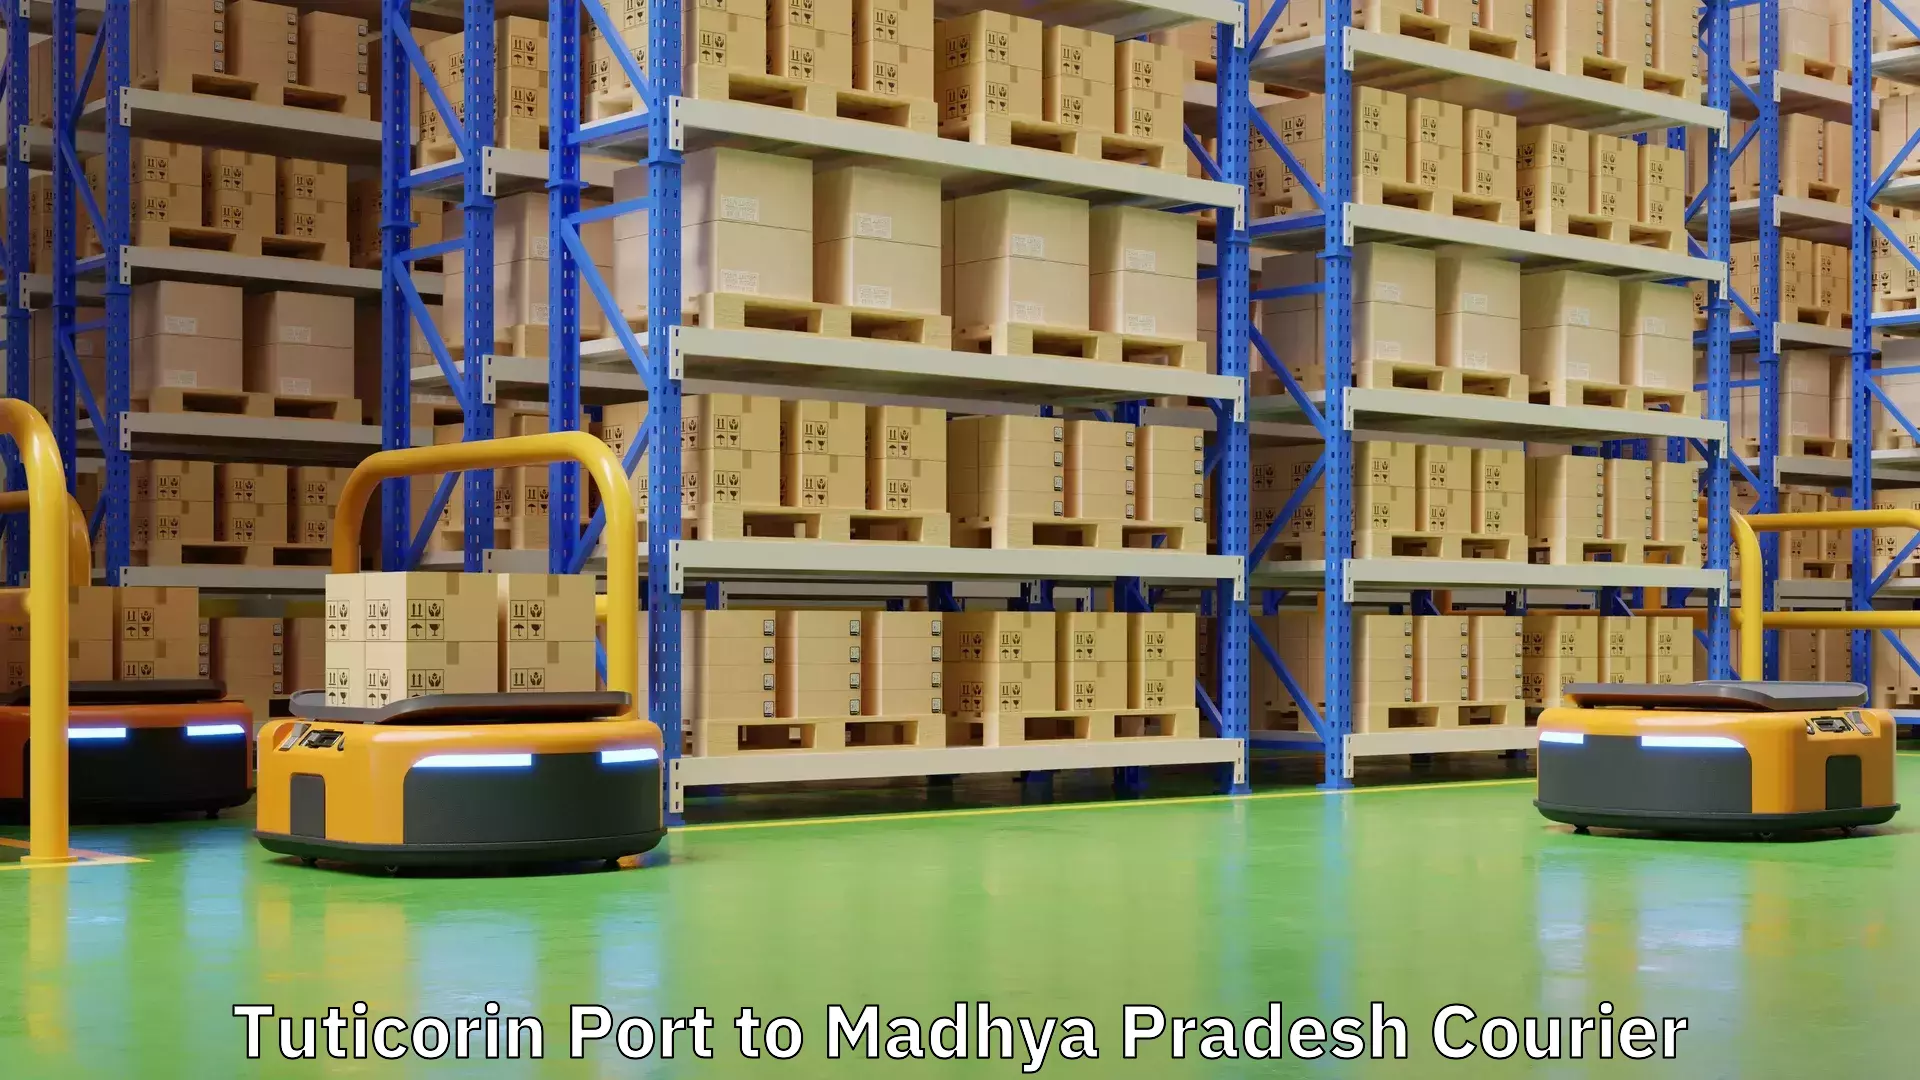 Express package handling Tuticorin Port to Madhya Pradesh